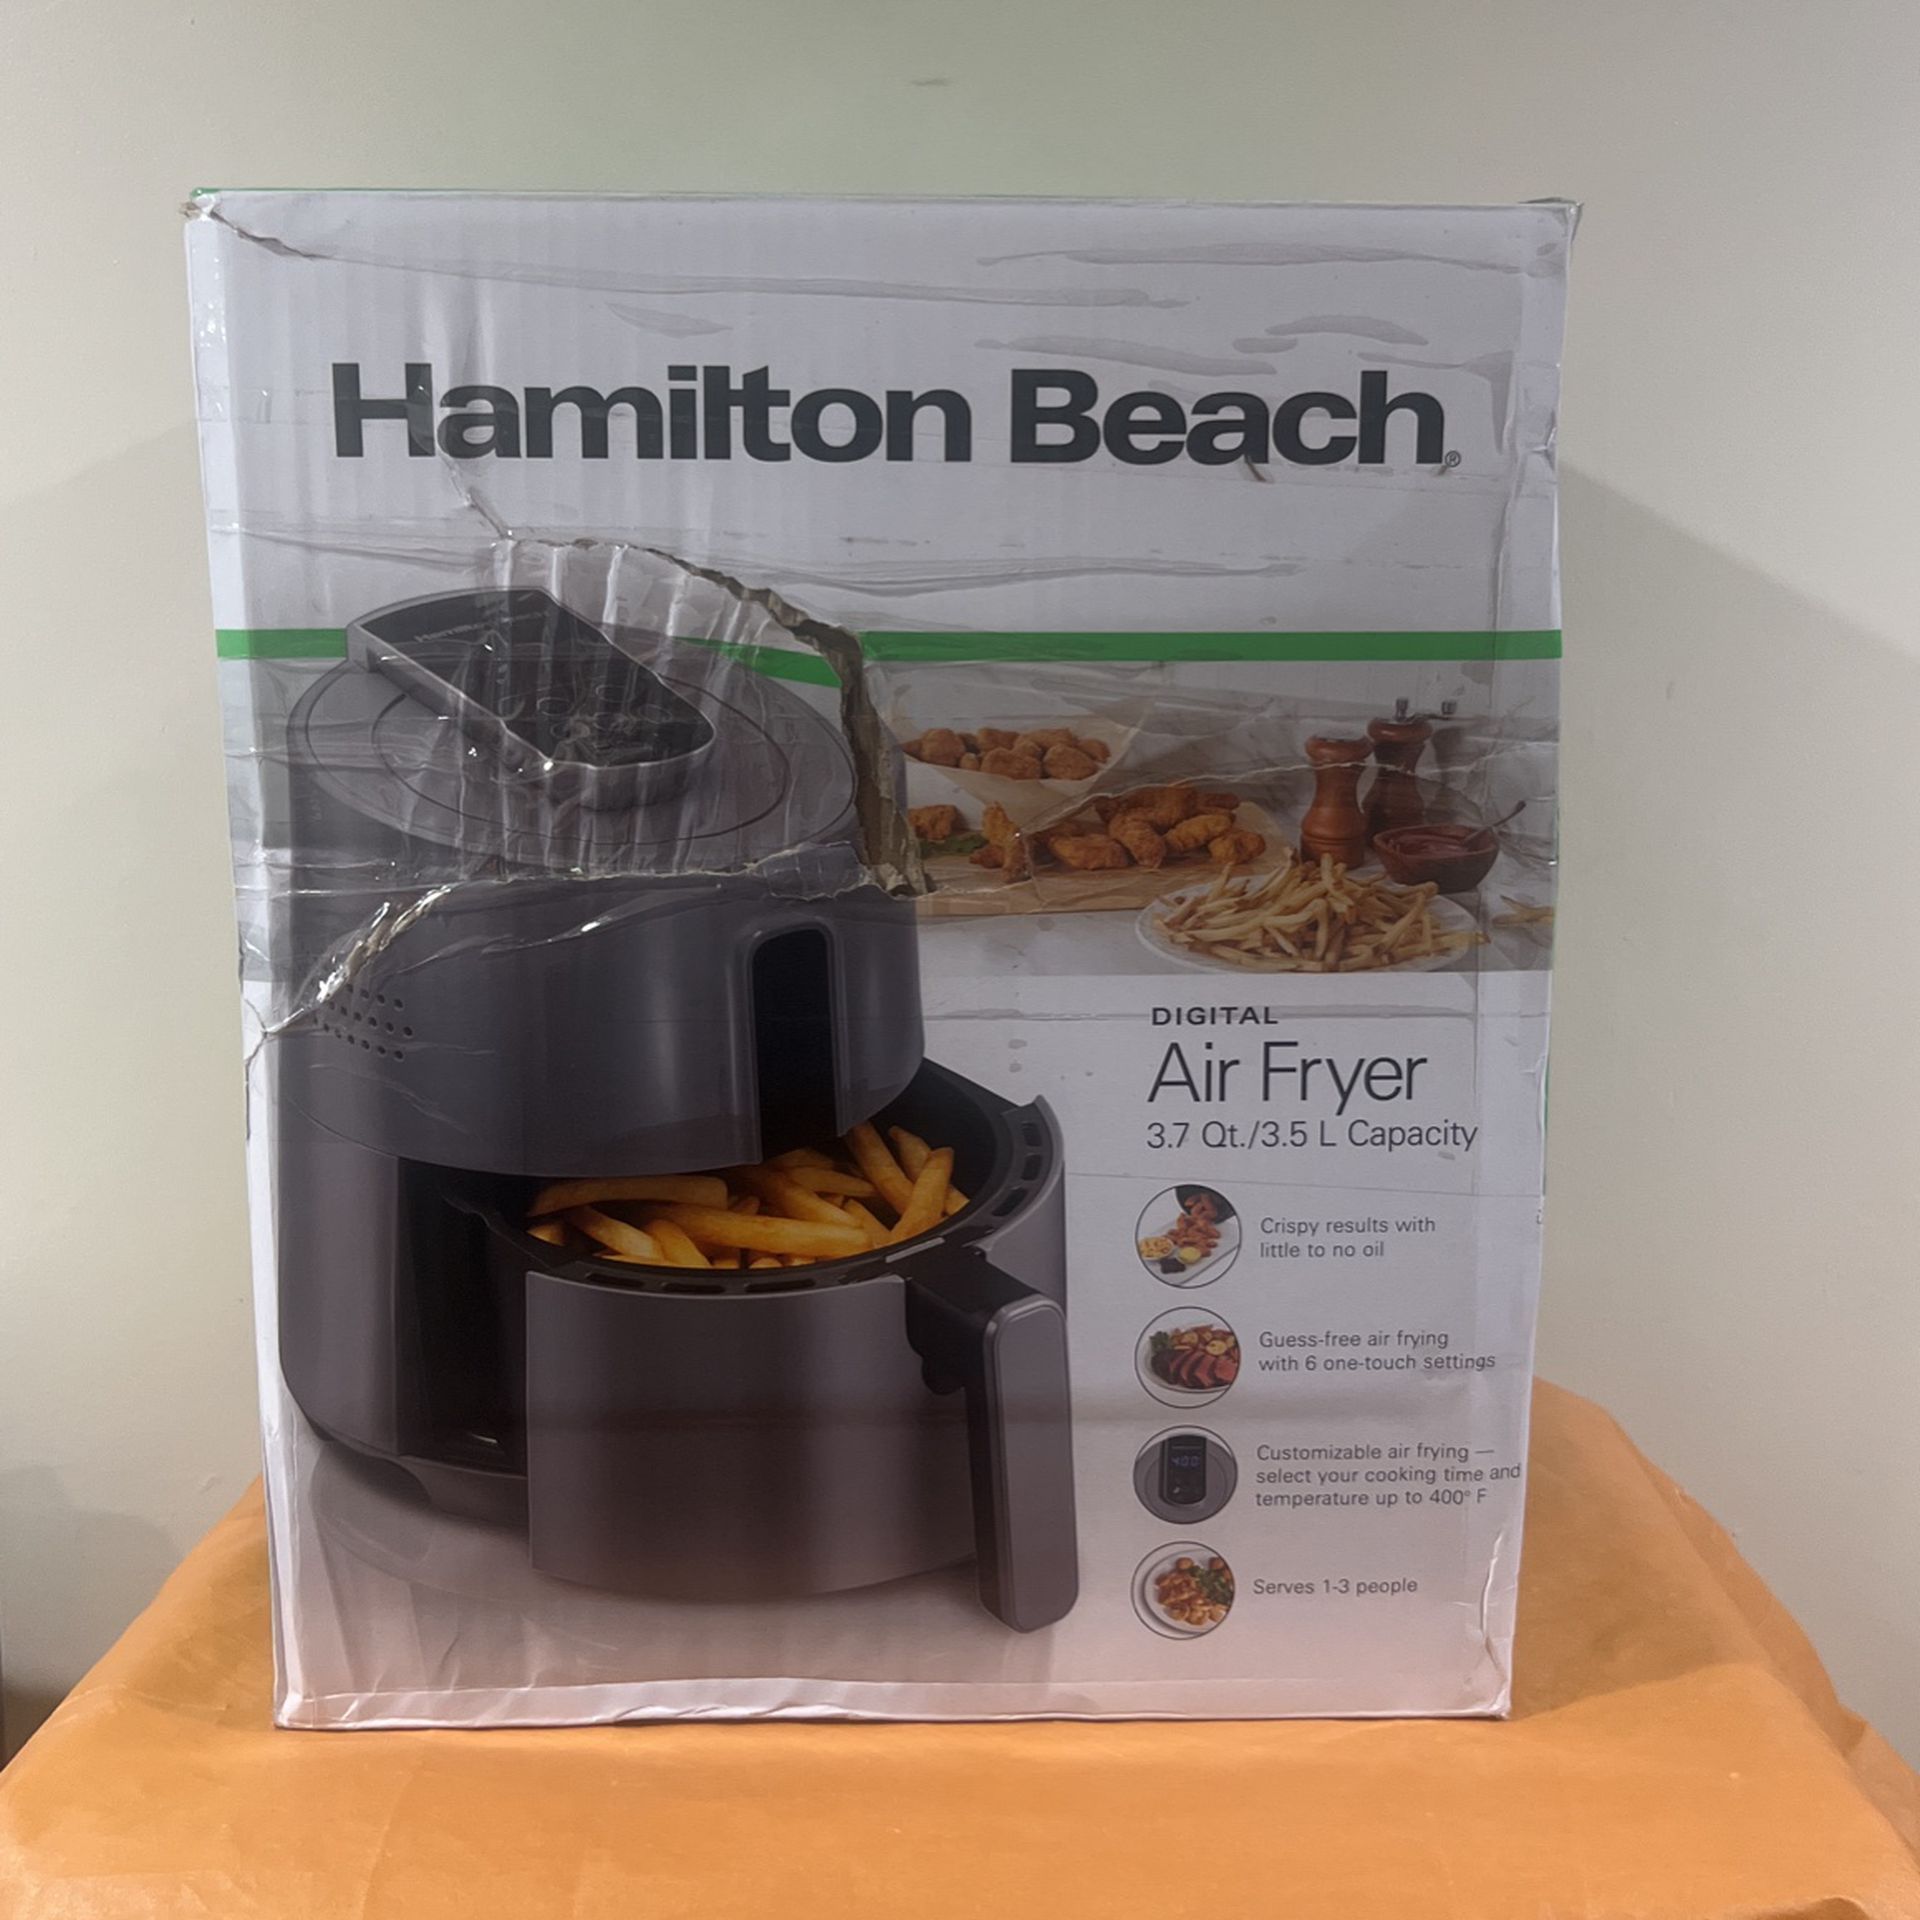 Hammonton Beach Digital Air Fryer 3.7 Qt./3.5 L Capacity 